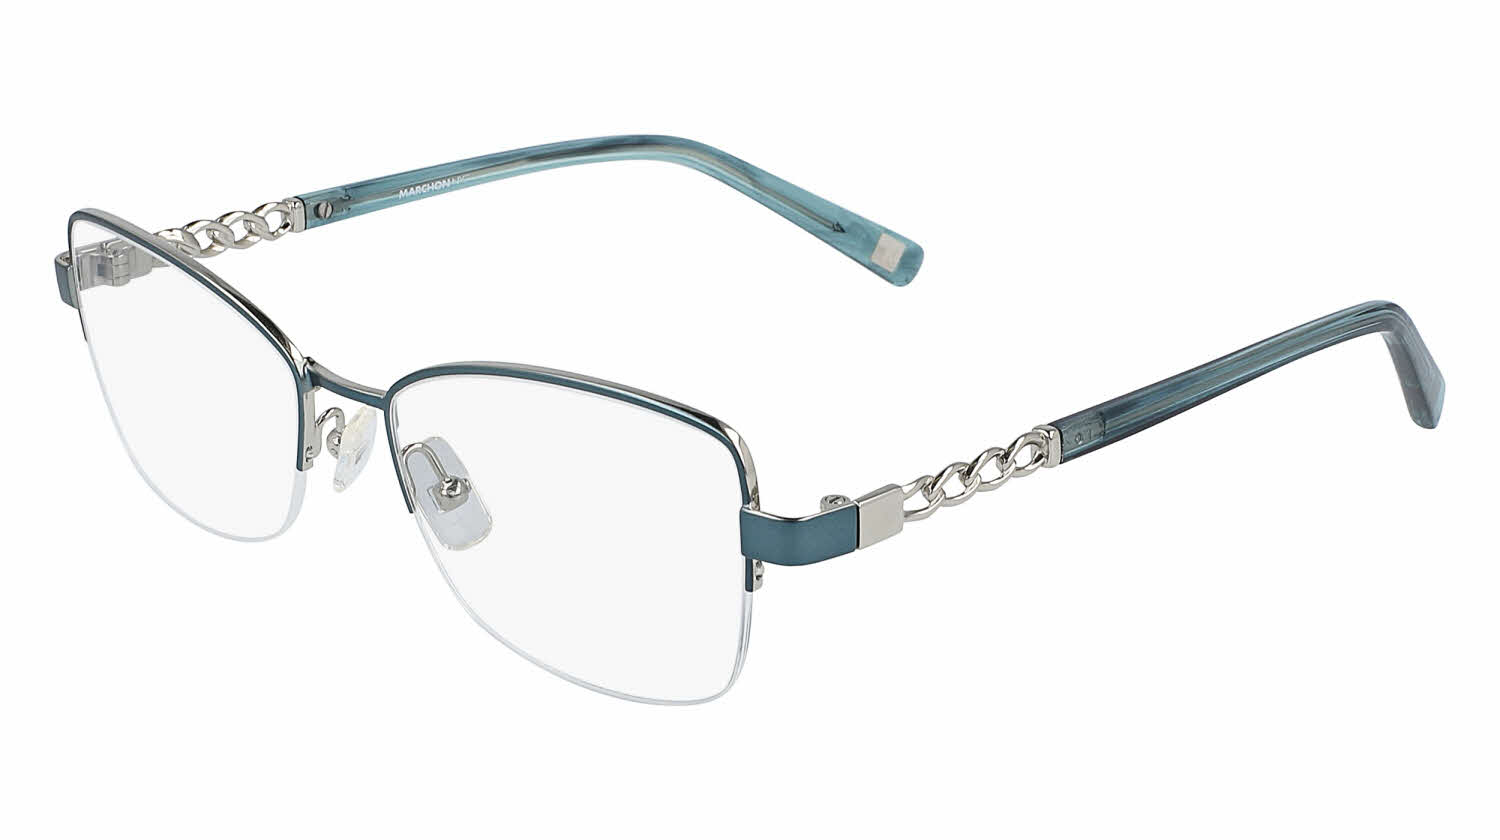 Marchon M-4006 Eyeglasses